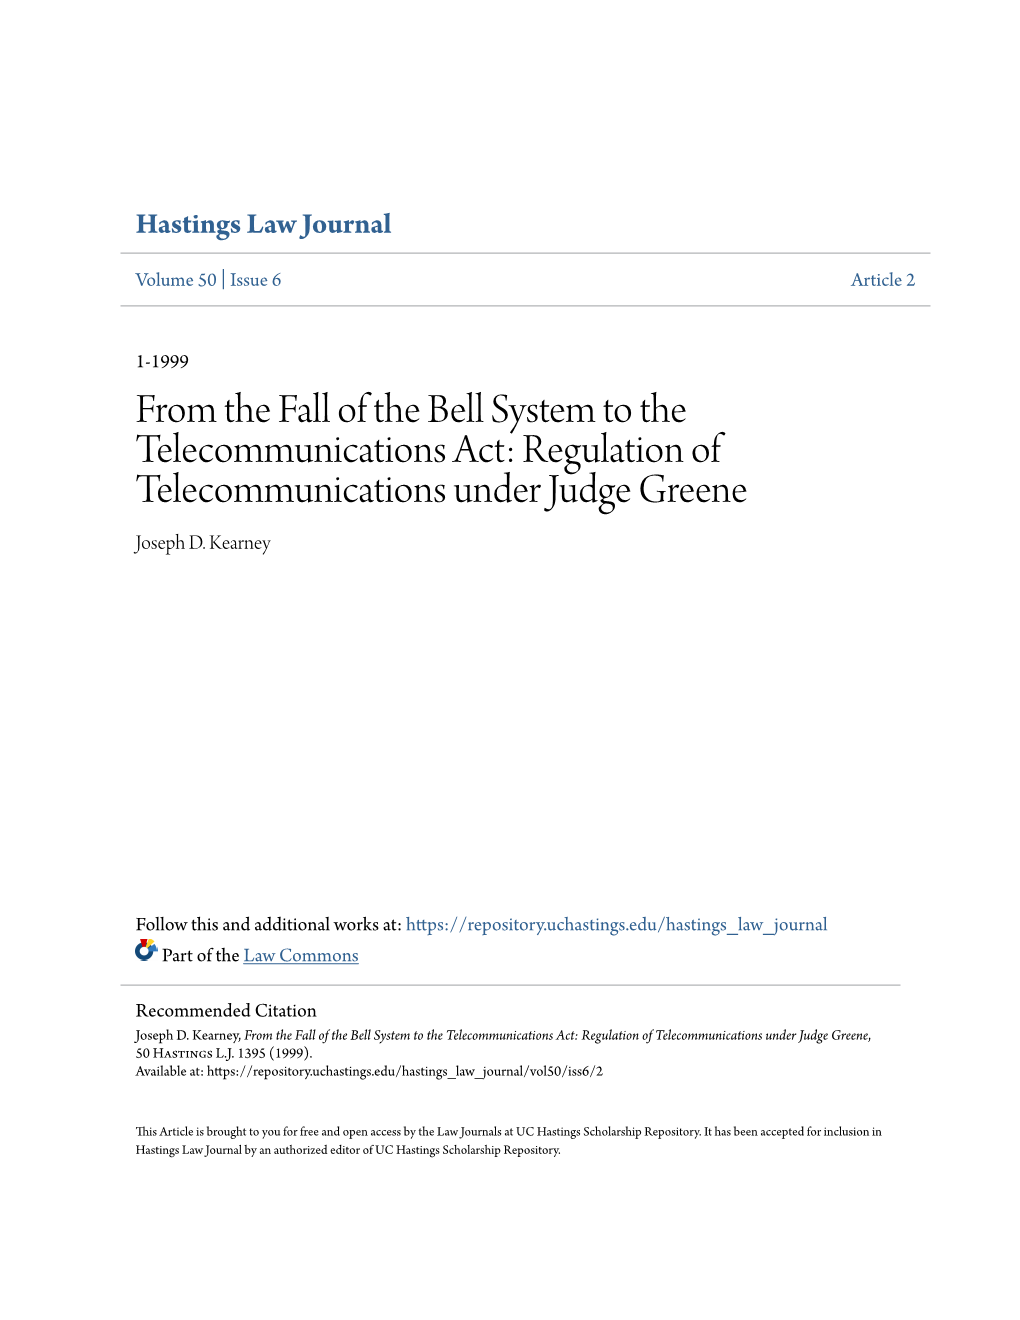 Regulation of Telecommunications Under Judge Greene Joseph D